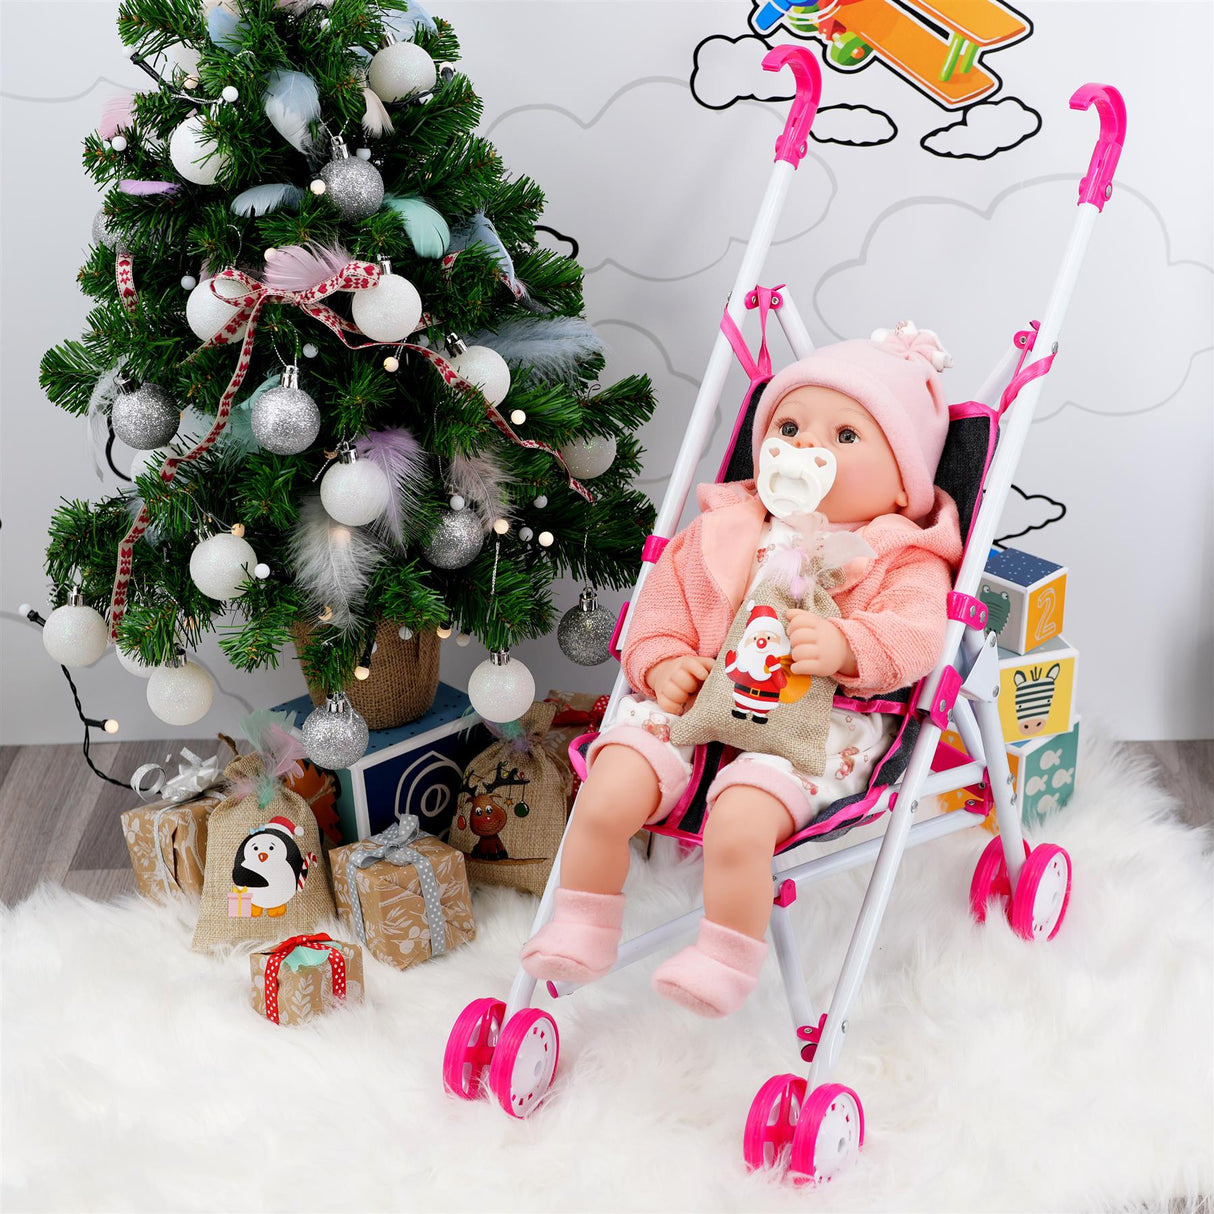 Pink Baby Doll Foldable Stroller by BiBi Doll - UKBuyZone